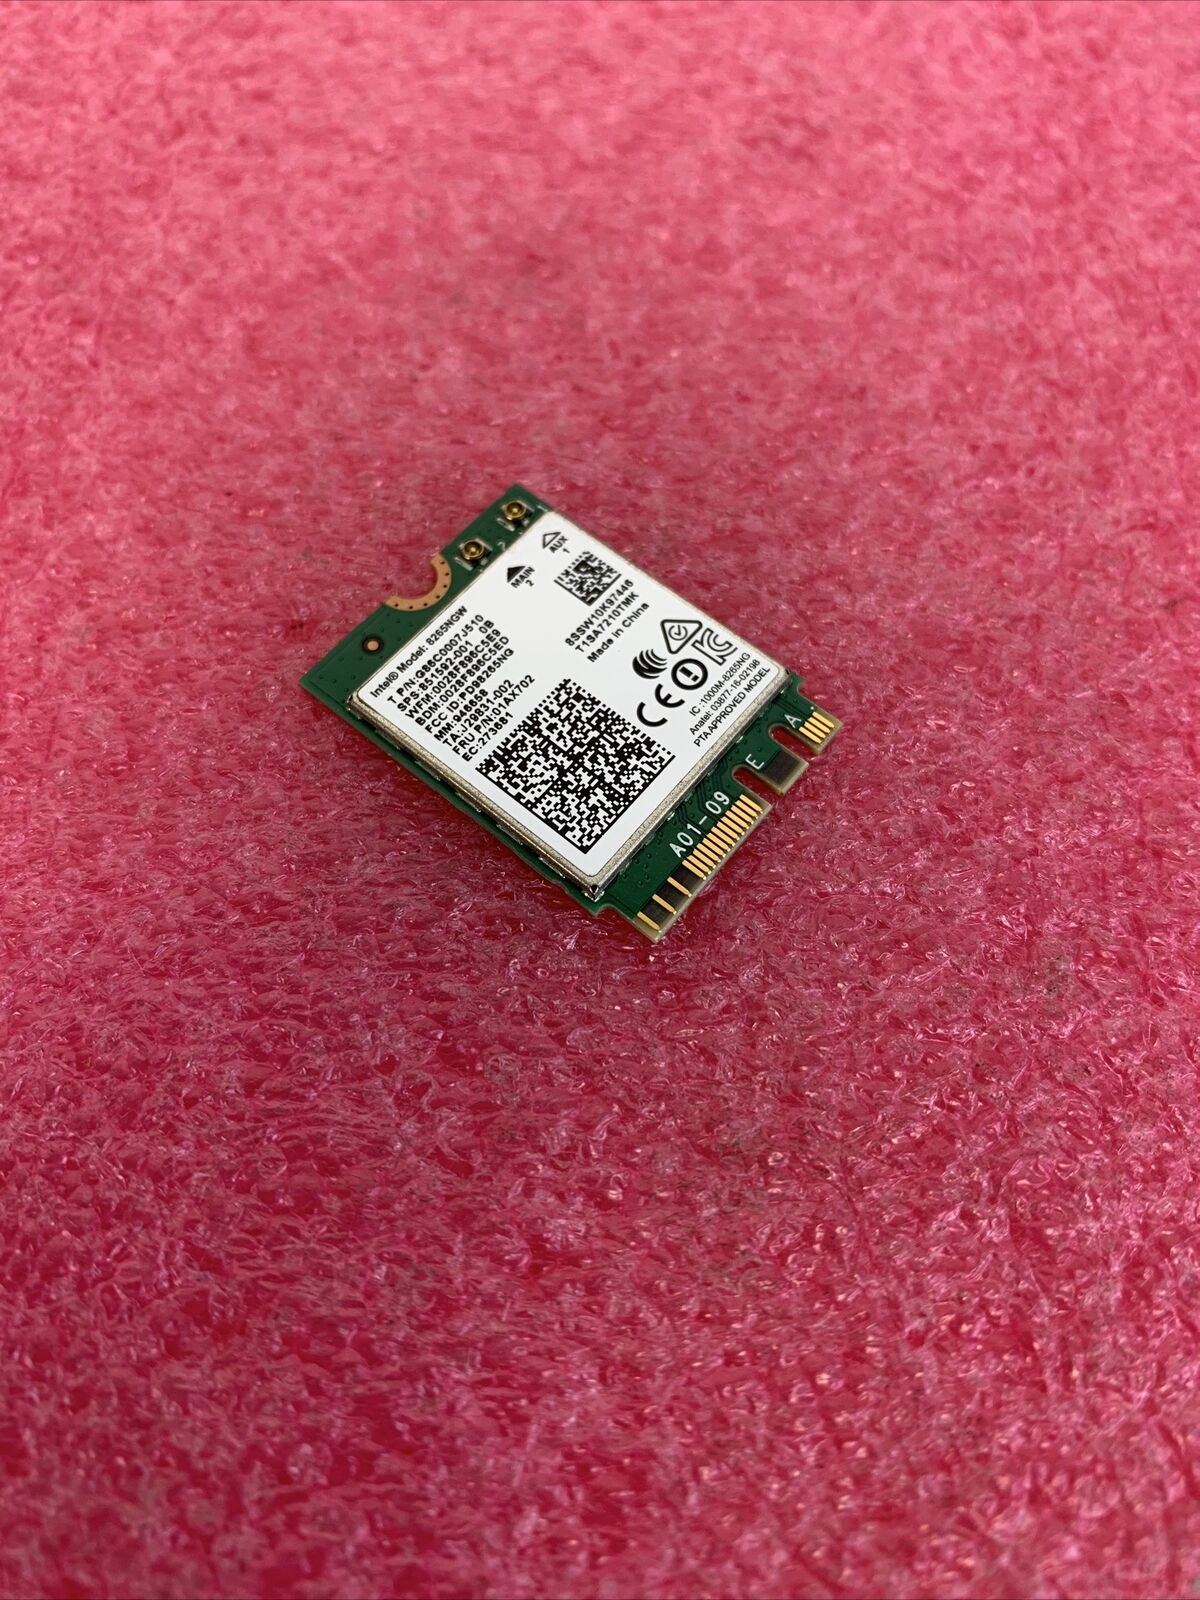 Intel 8265NGW Dual Band Wireless-AC Bluetooth WiFi M.2 Card